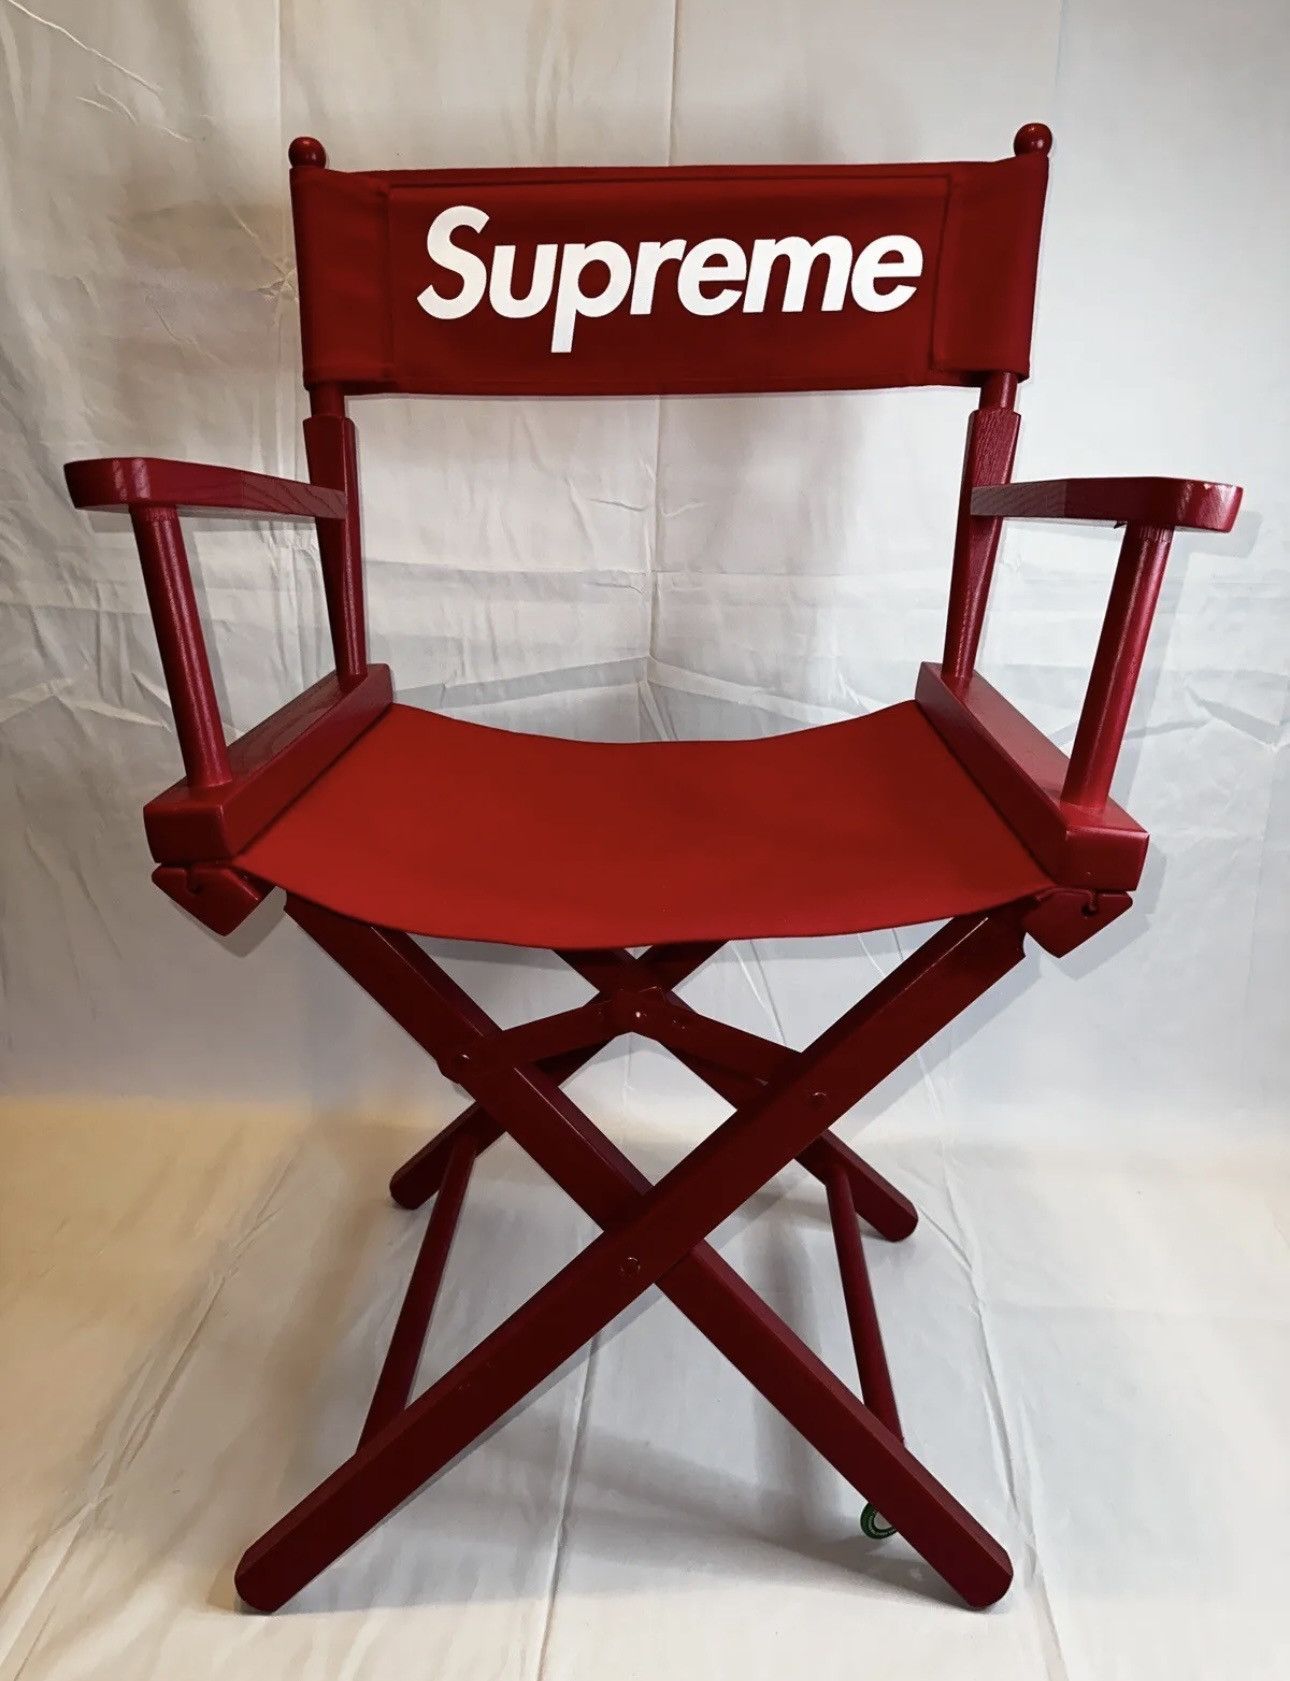 Supreme Supreme red director chair | Grailed